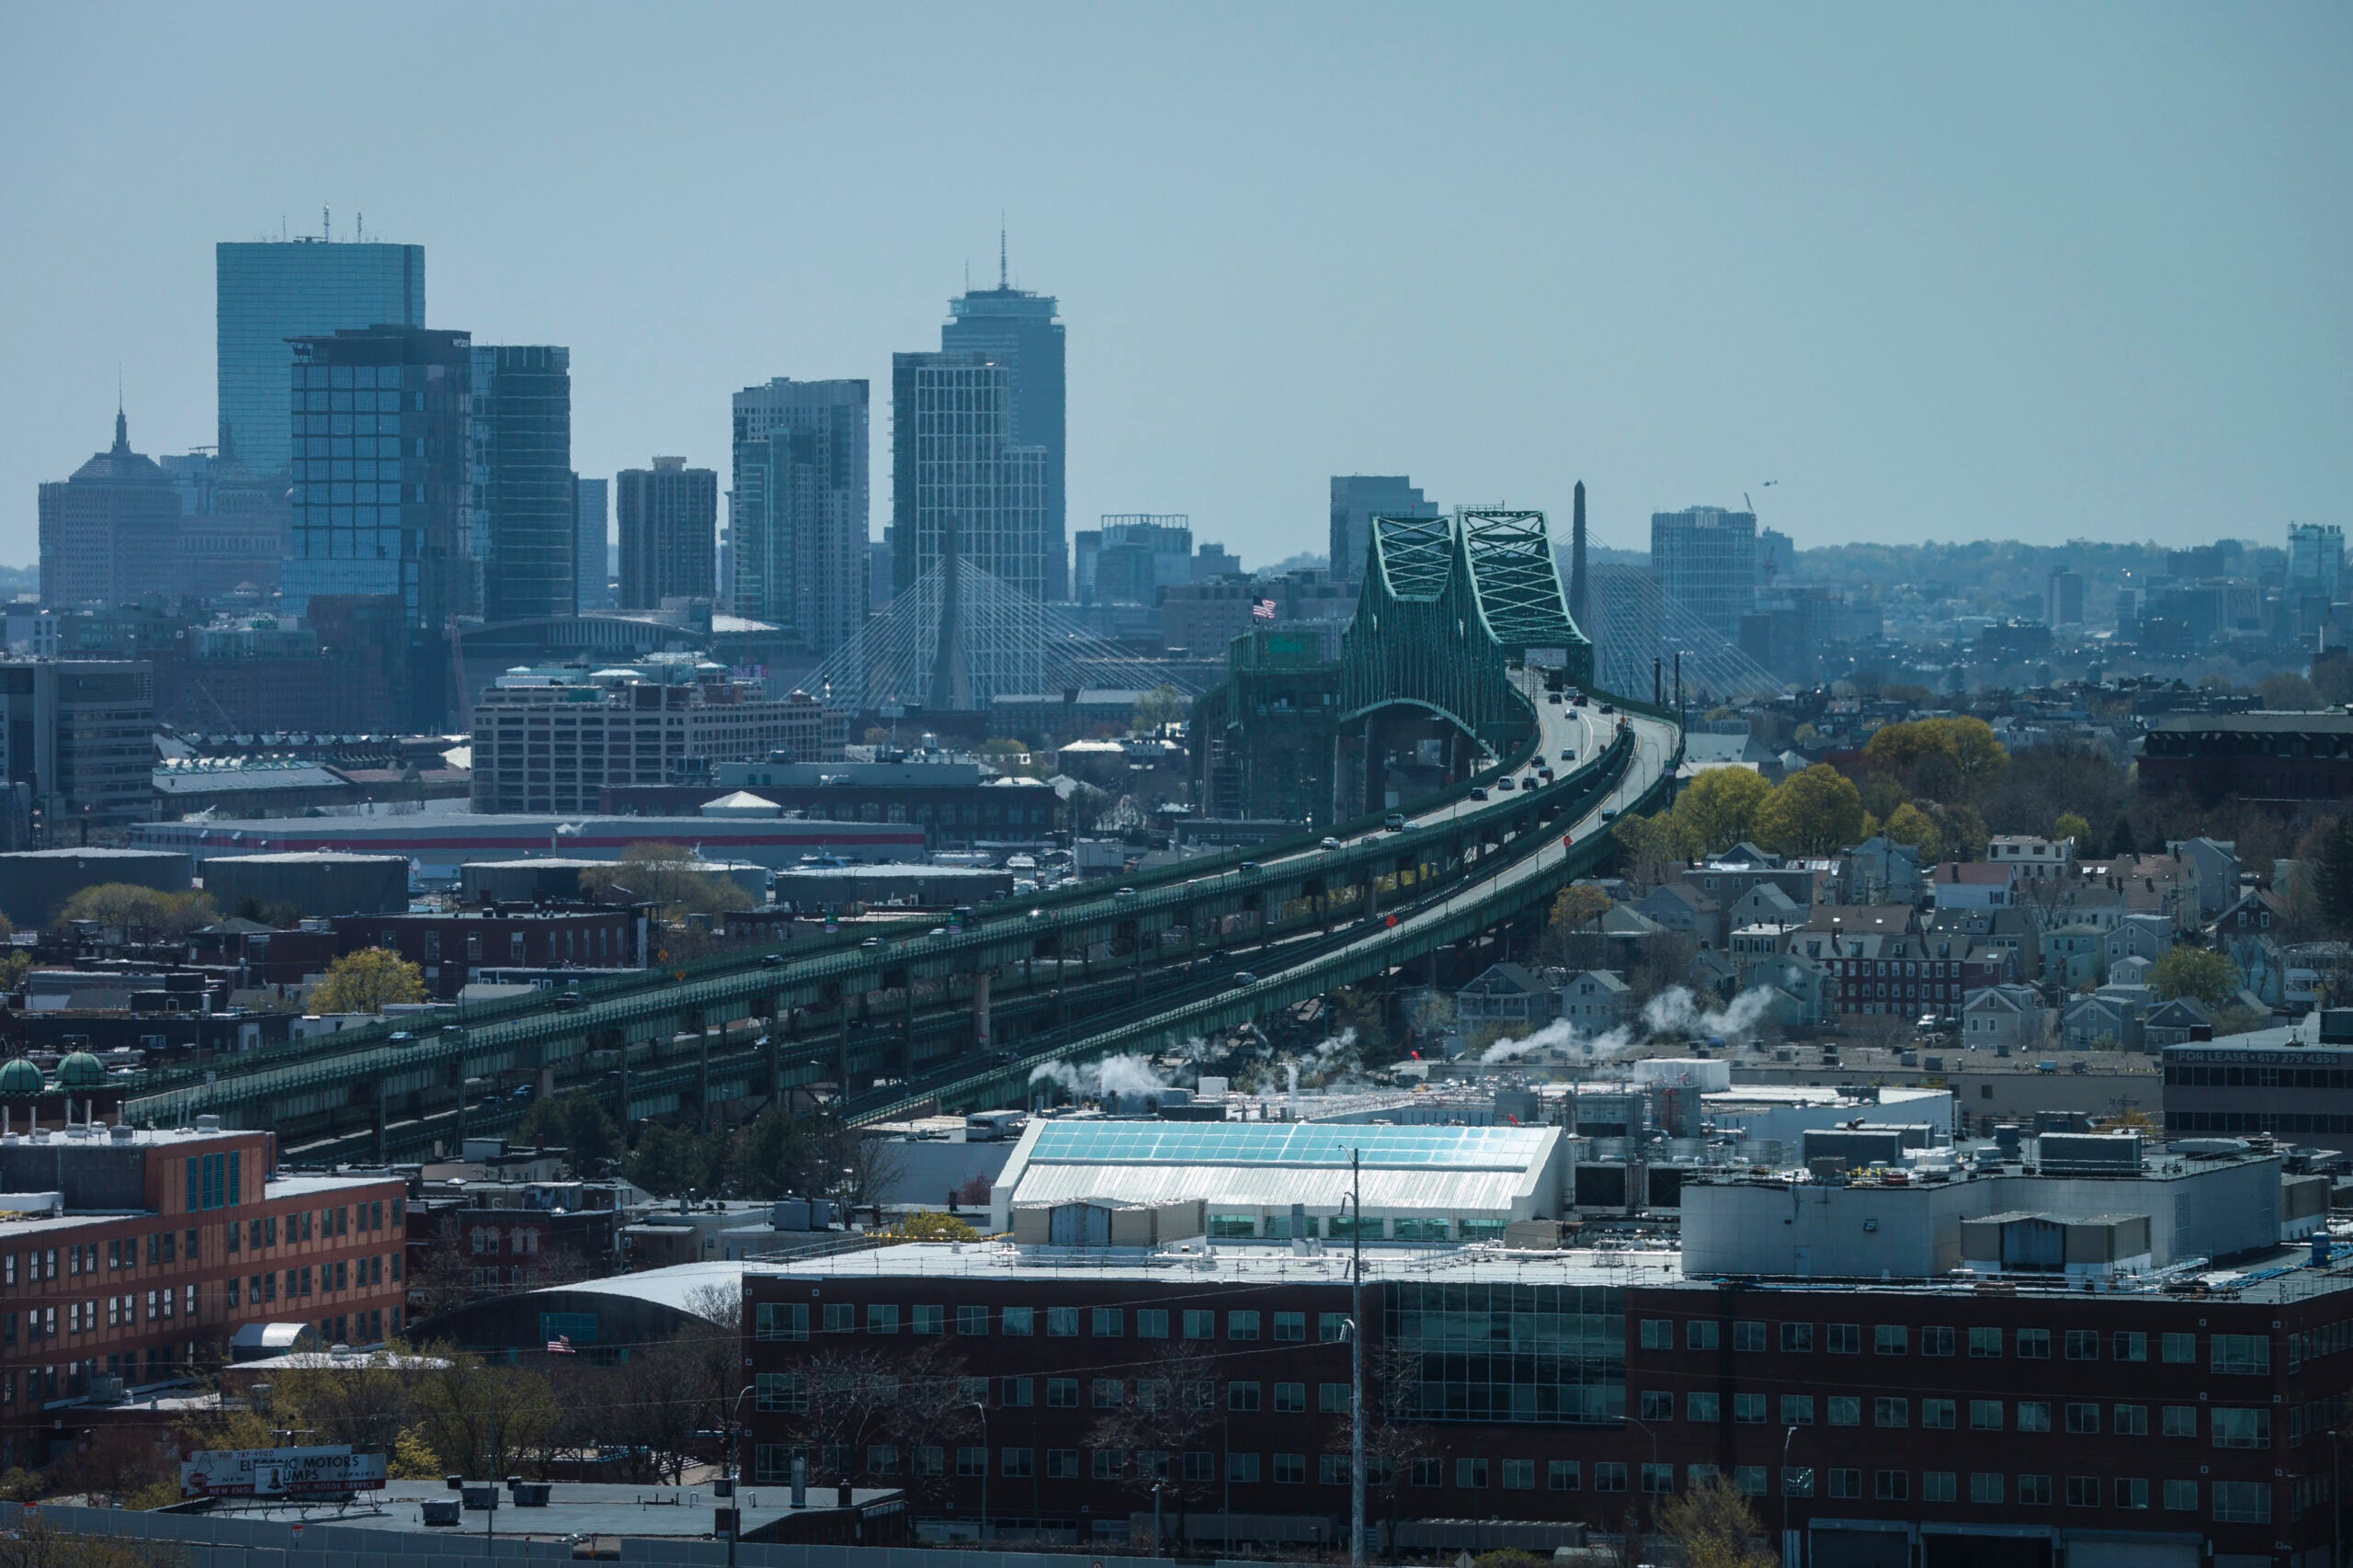 The Tobin Bridge spans across the Boston skyline